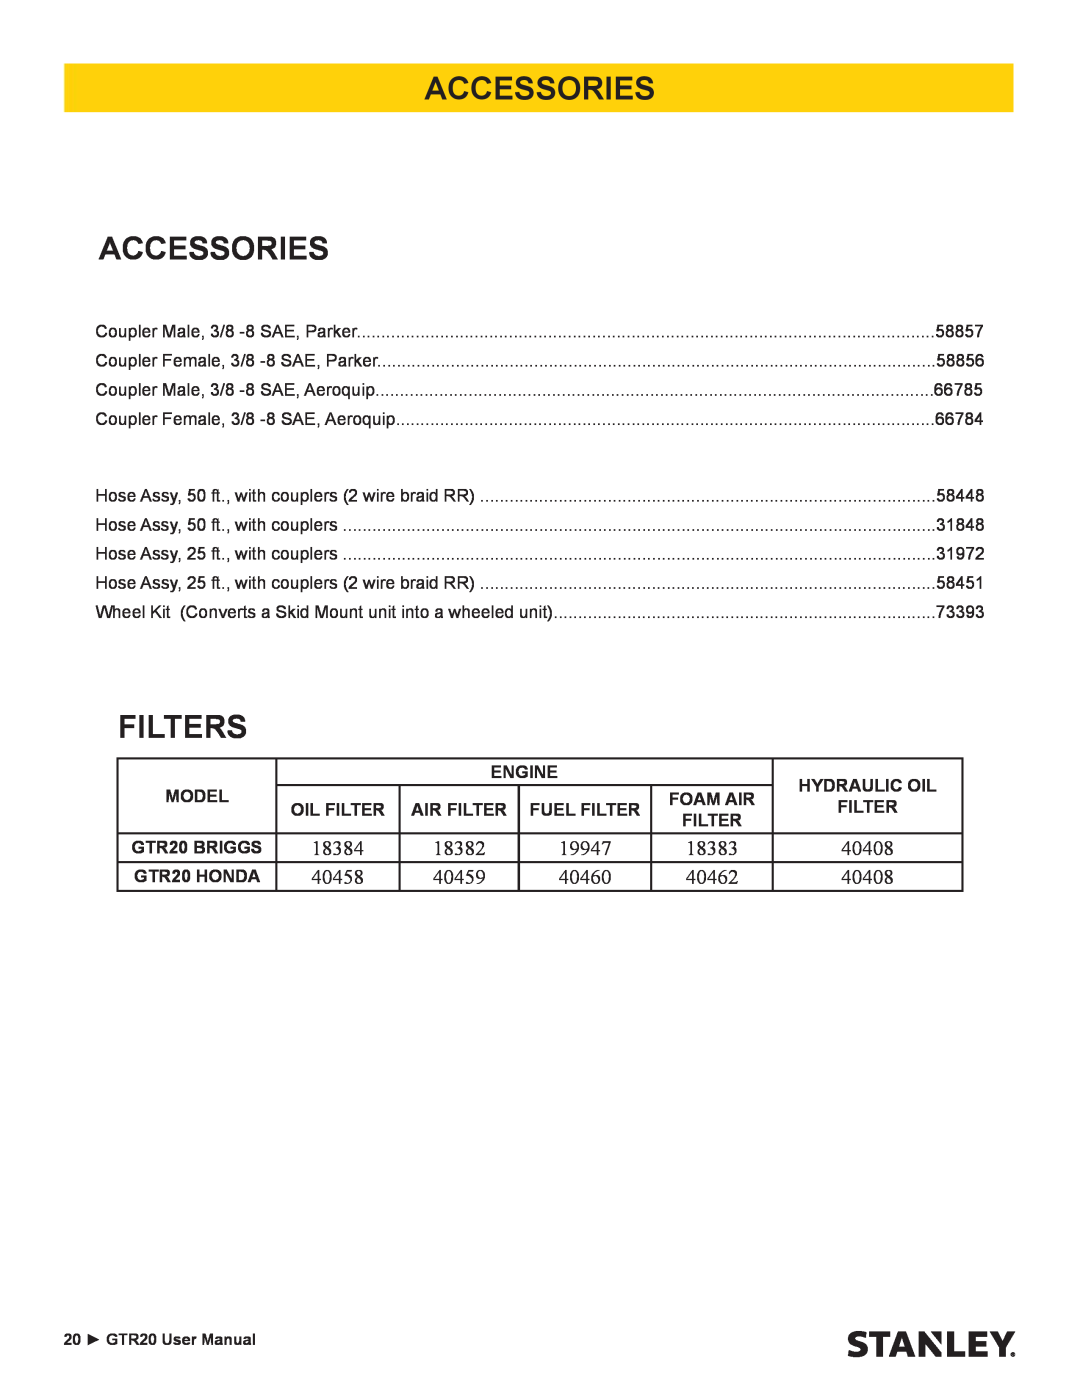 Stanley Black & Decker GTR20 Accessories Accessories, Filters, 18384, 18382, 19947, 18383, 40408, 40458, 40459, 40460 